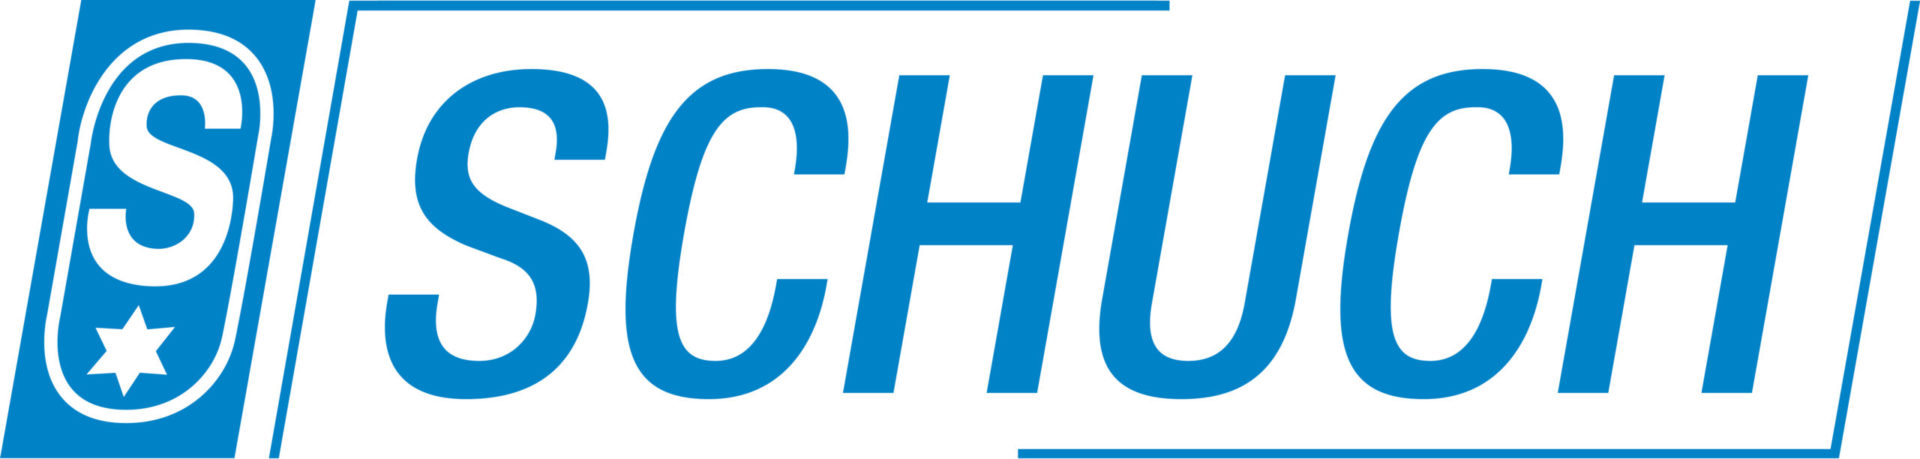 I-Logo-Schuch-scaled.jpg